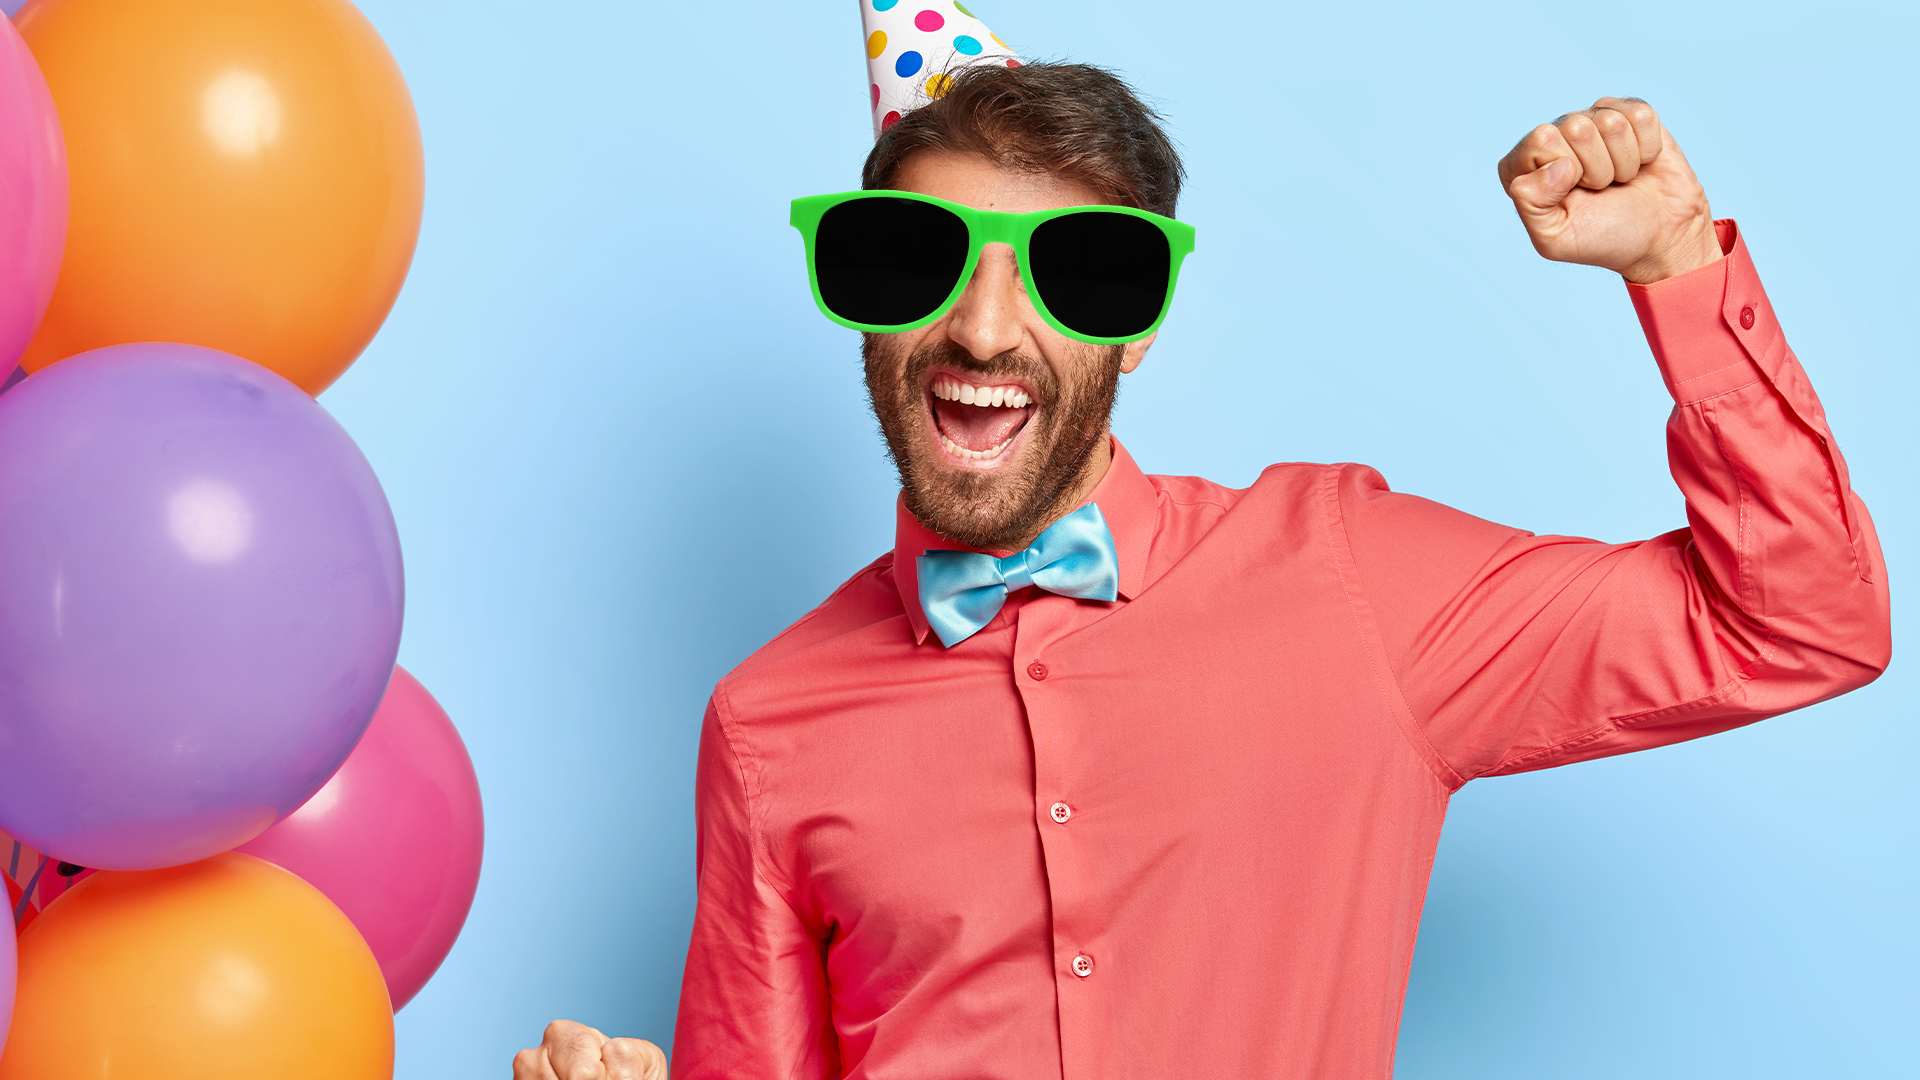 Man celebrating birthday with balloons